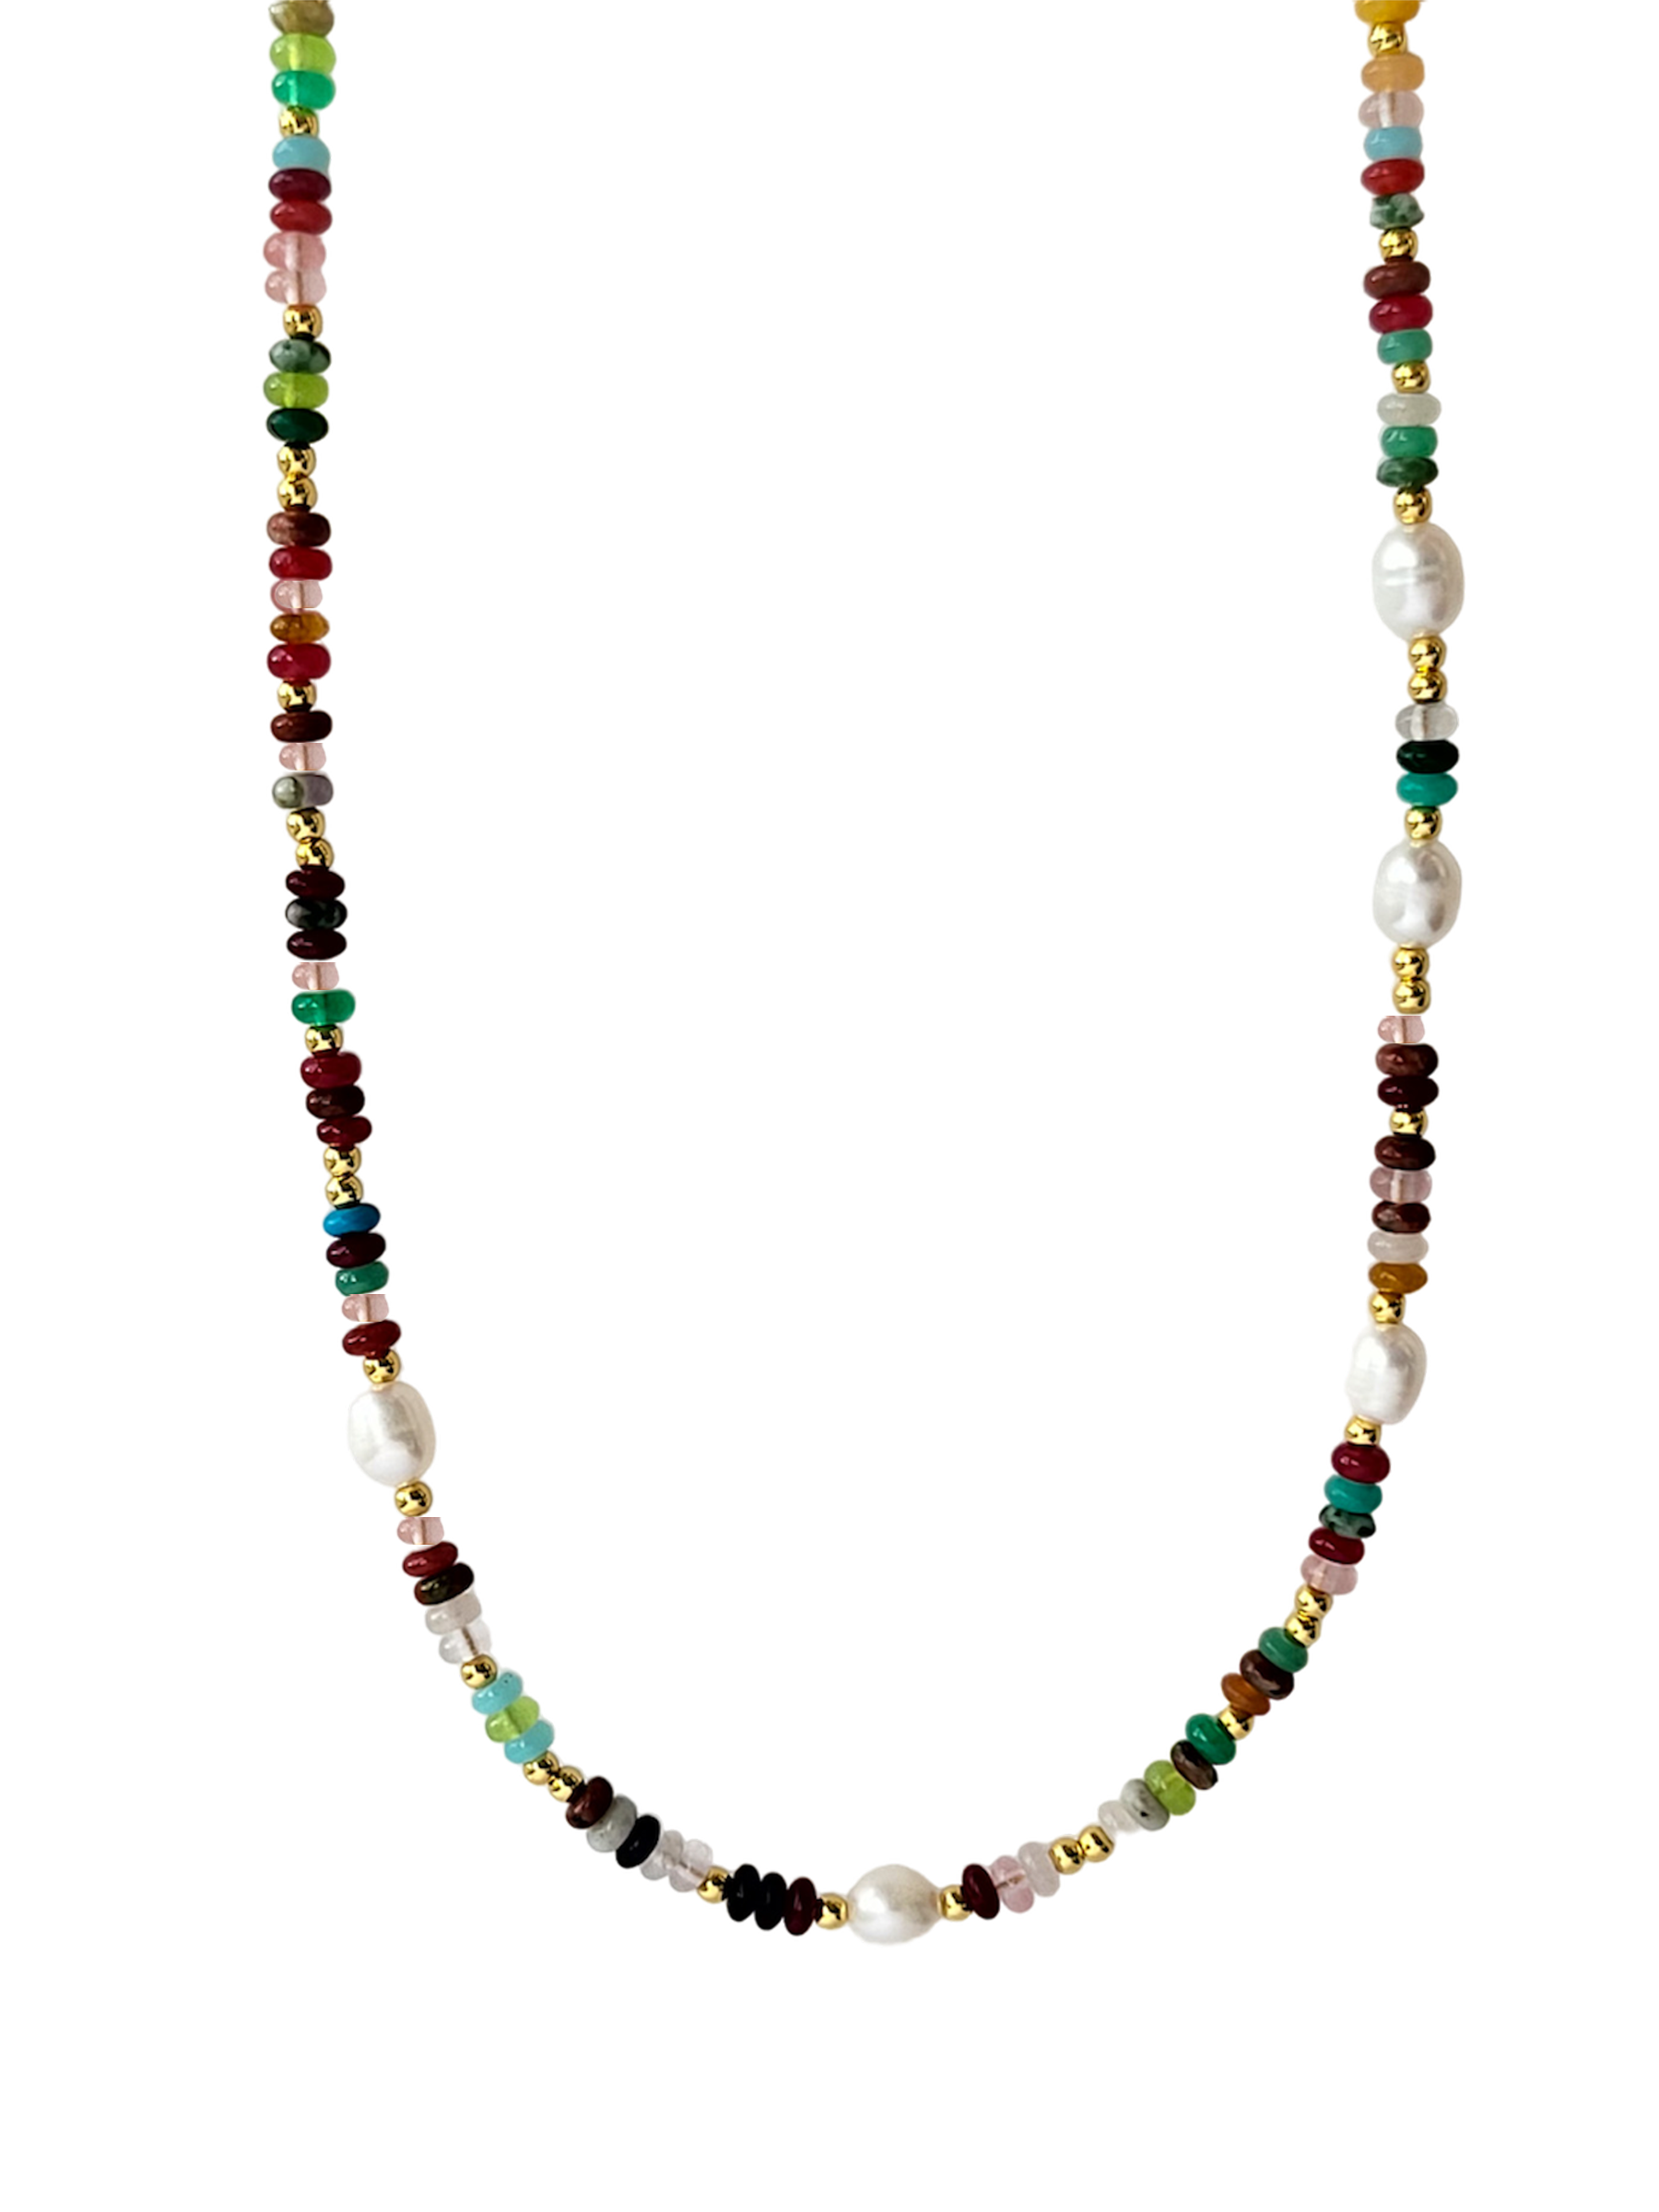 Gemstone & Pearl Necklace